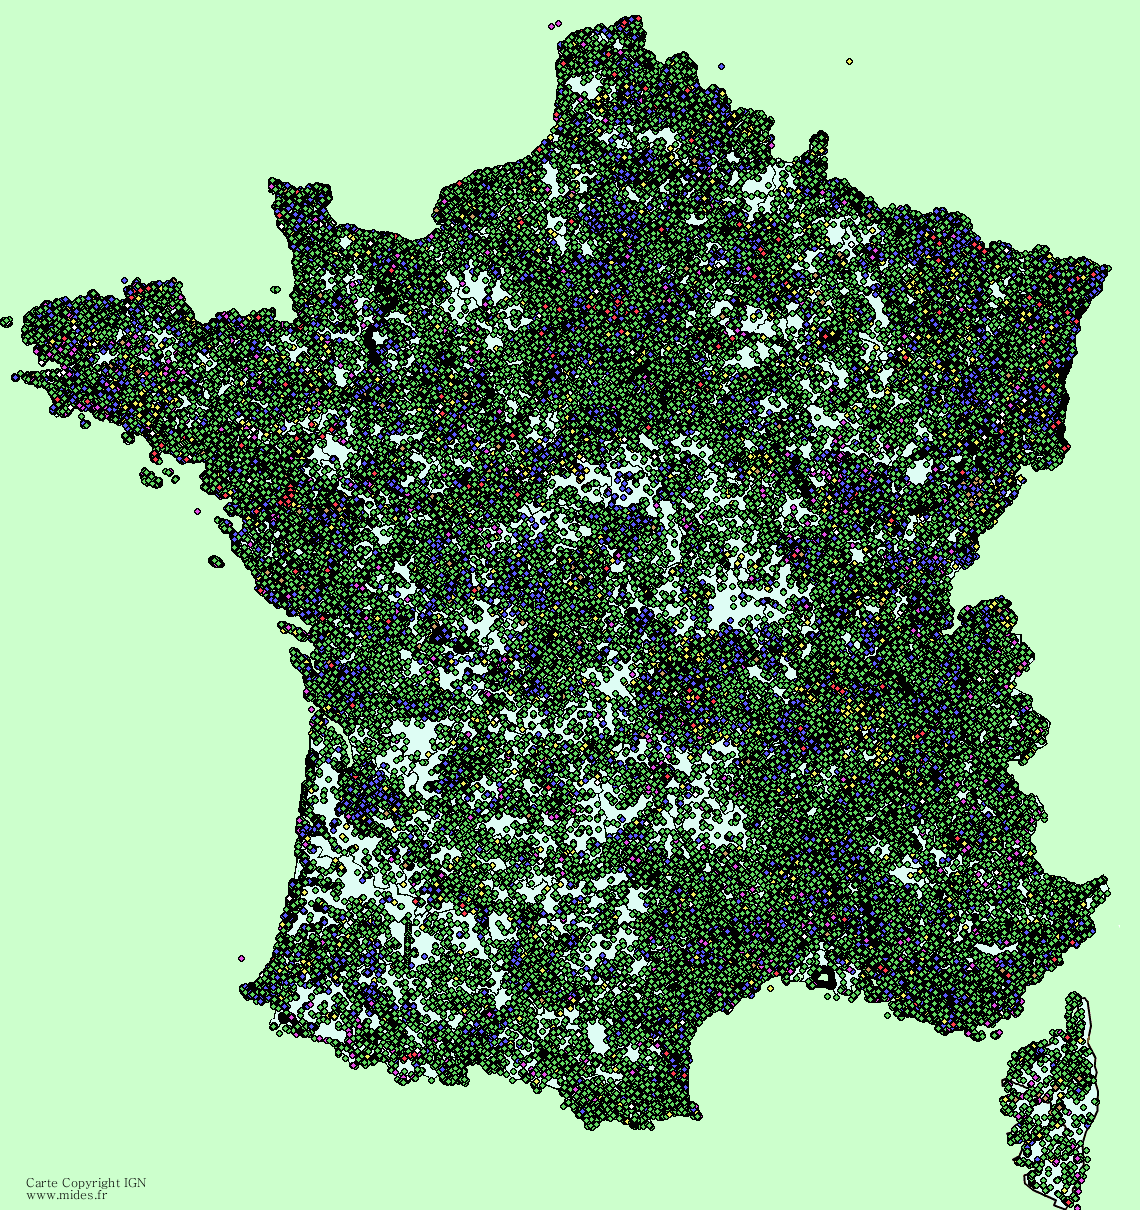 Carte intéractive des caches existantes en France